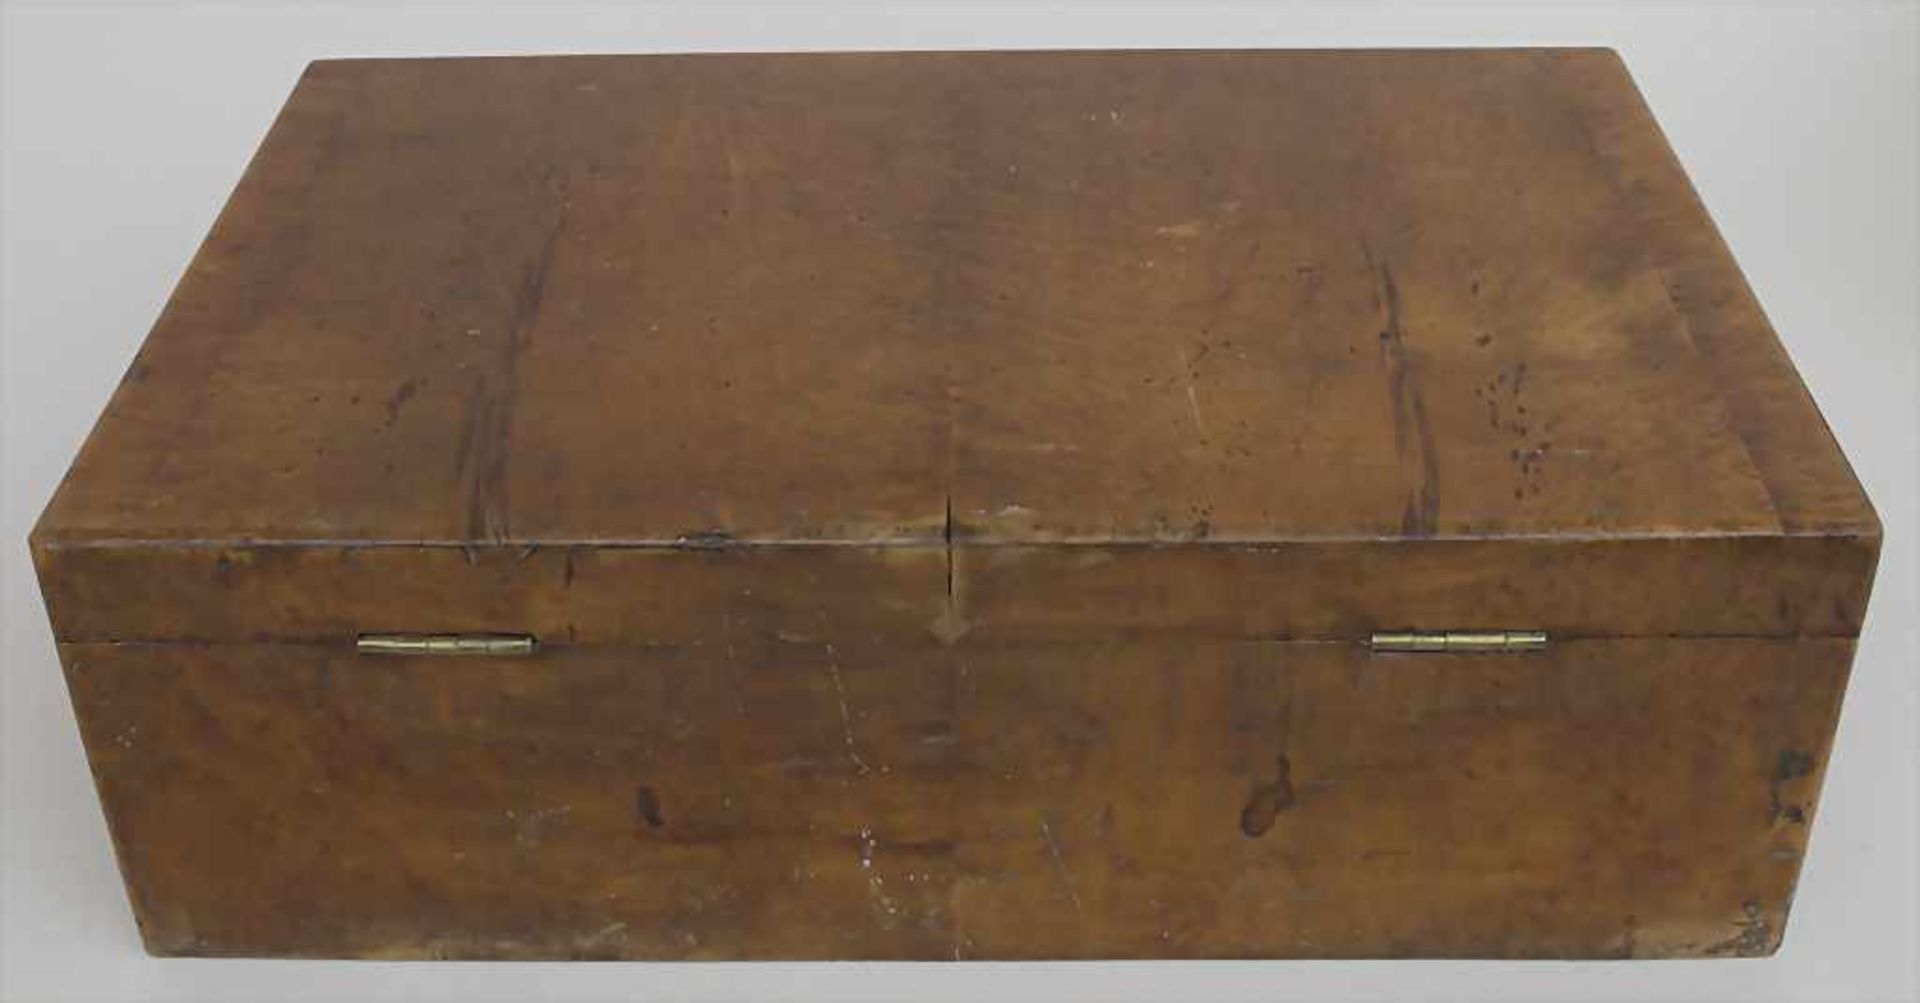 Reise-Schreibschatulle / A travel writing casket, England, Mitte 19. Jh. - Bild 6 aus 6